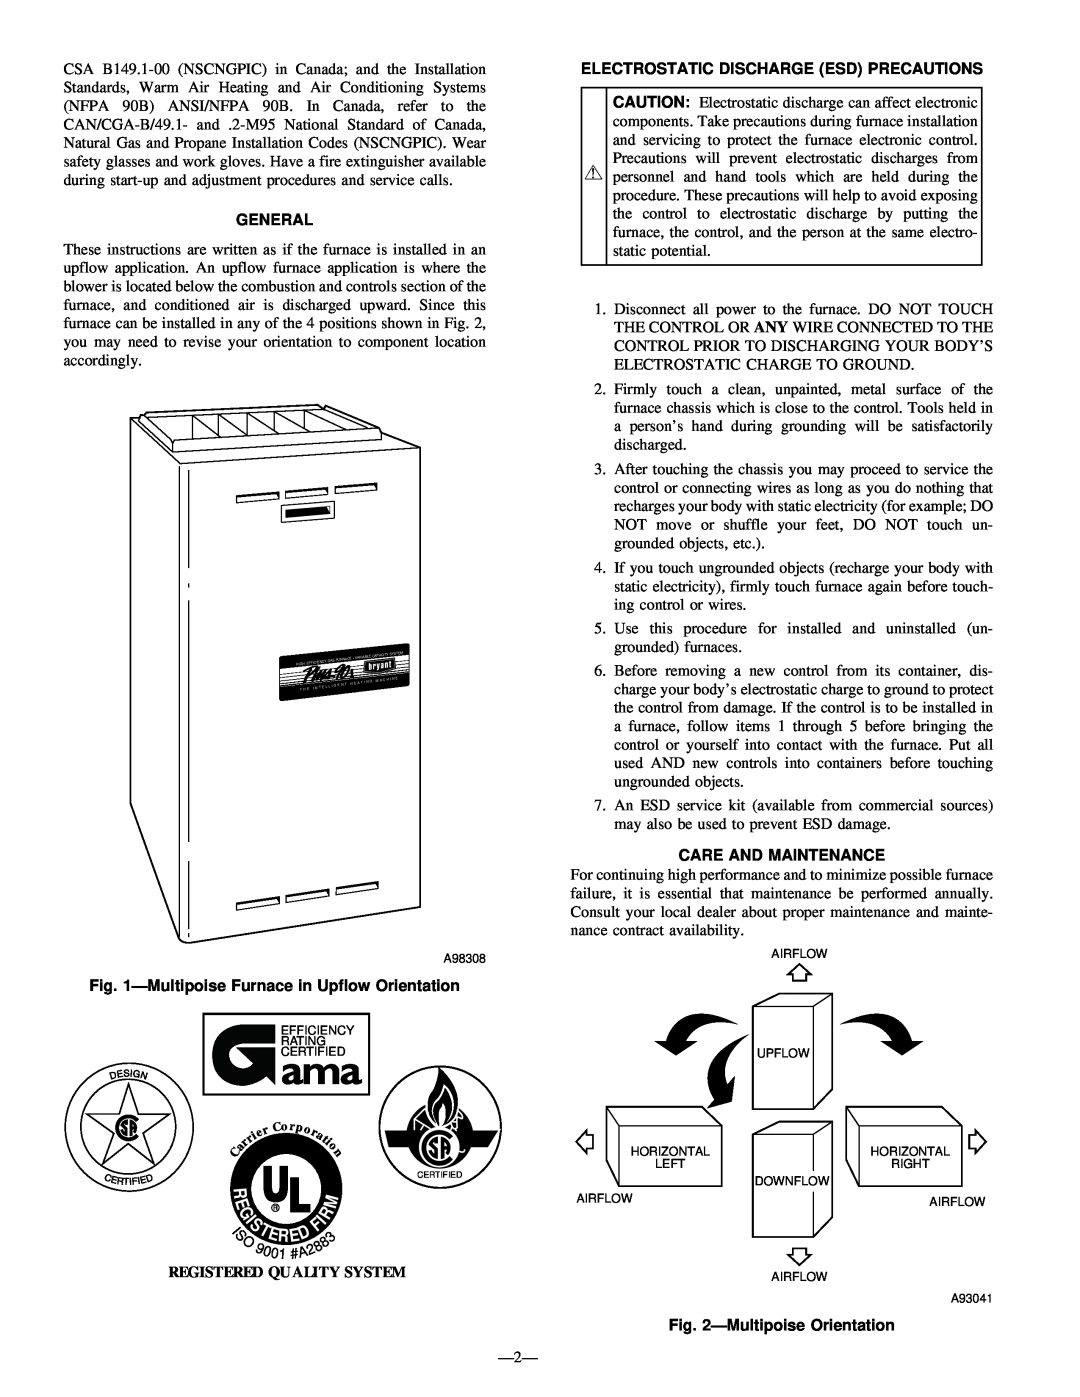 Bryant 350MAV user manual General, MultipoiseFurnace in Upflow Orientation, Electrostatic Discharge Esd Precautions 